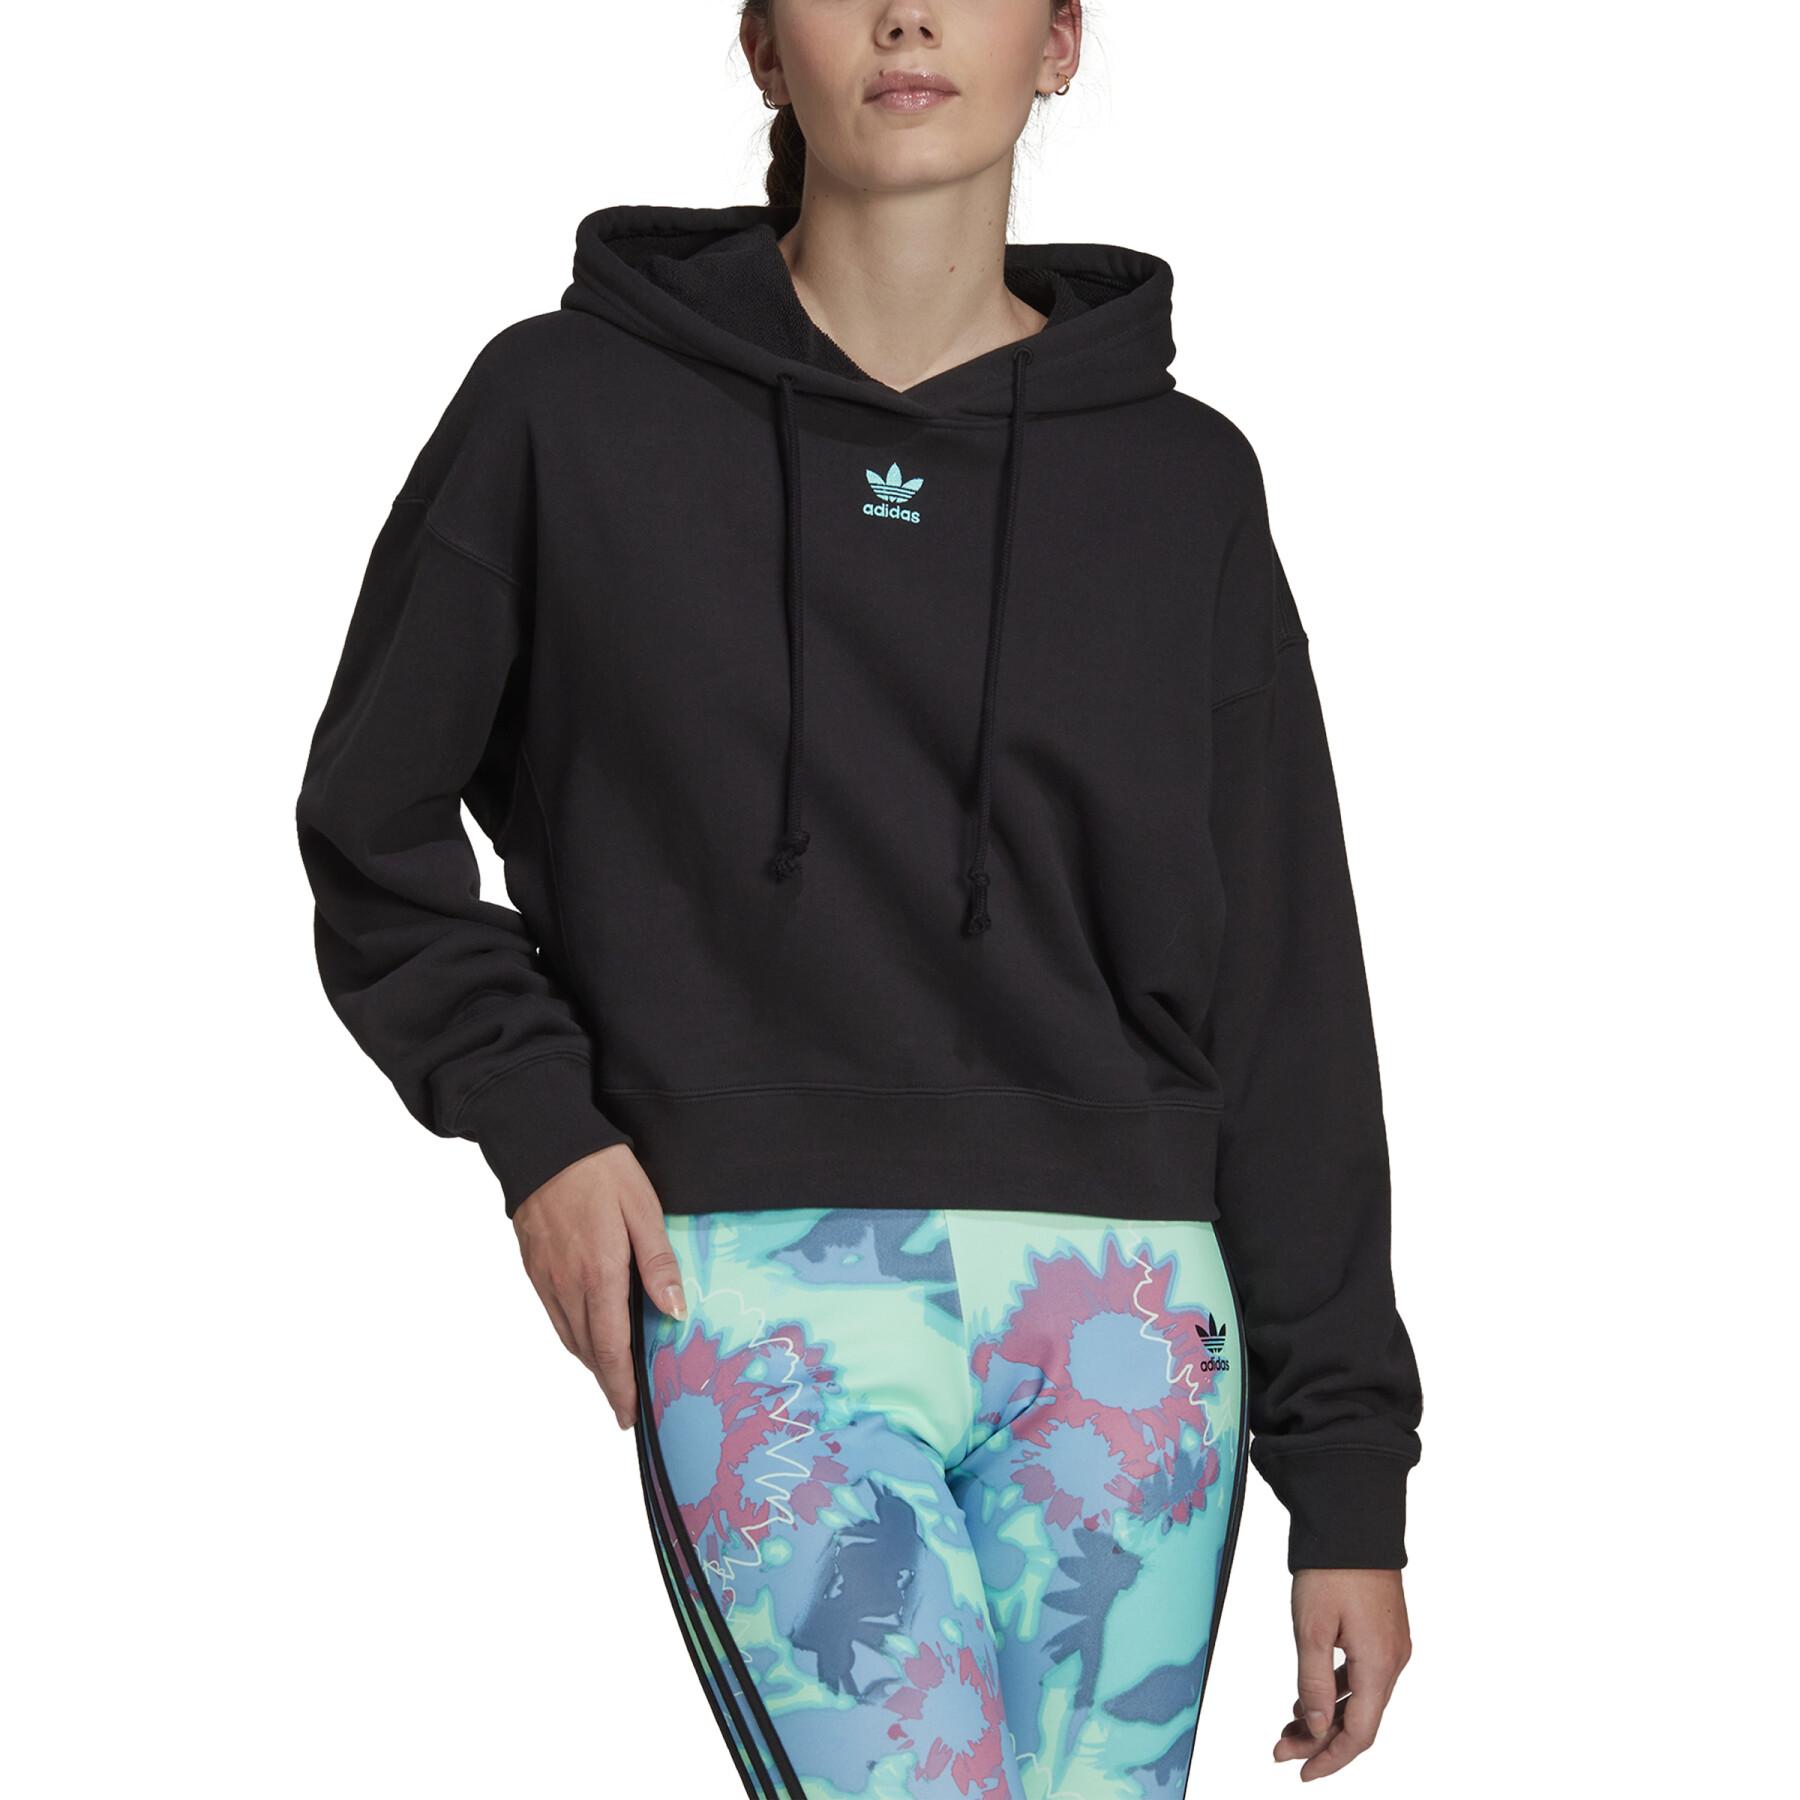 Camisola com capuz feminino adidas Originals Sunflower Graphic